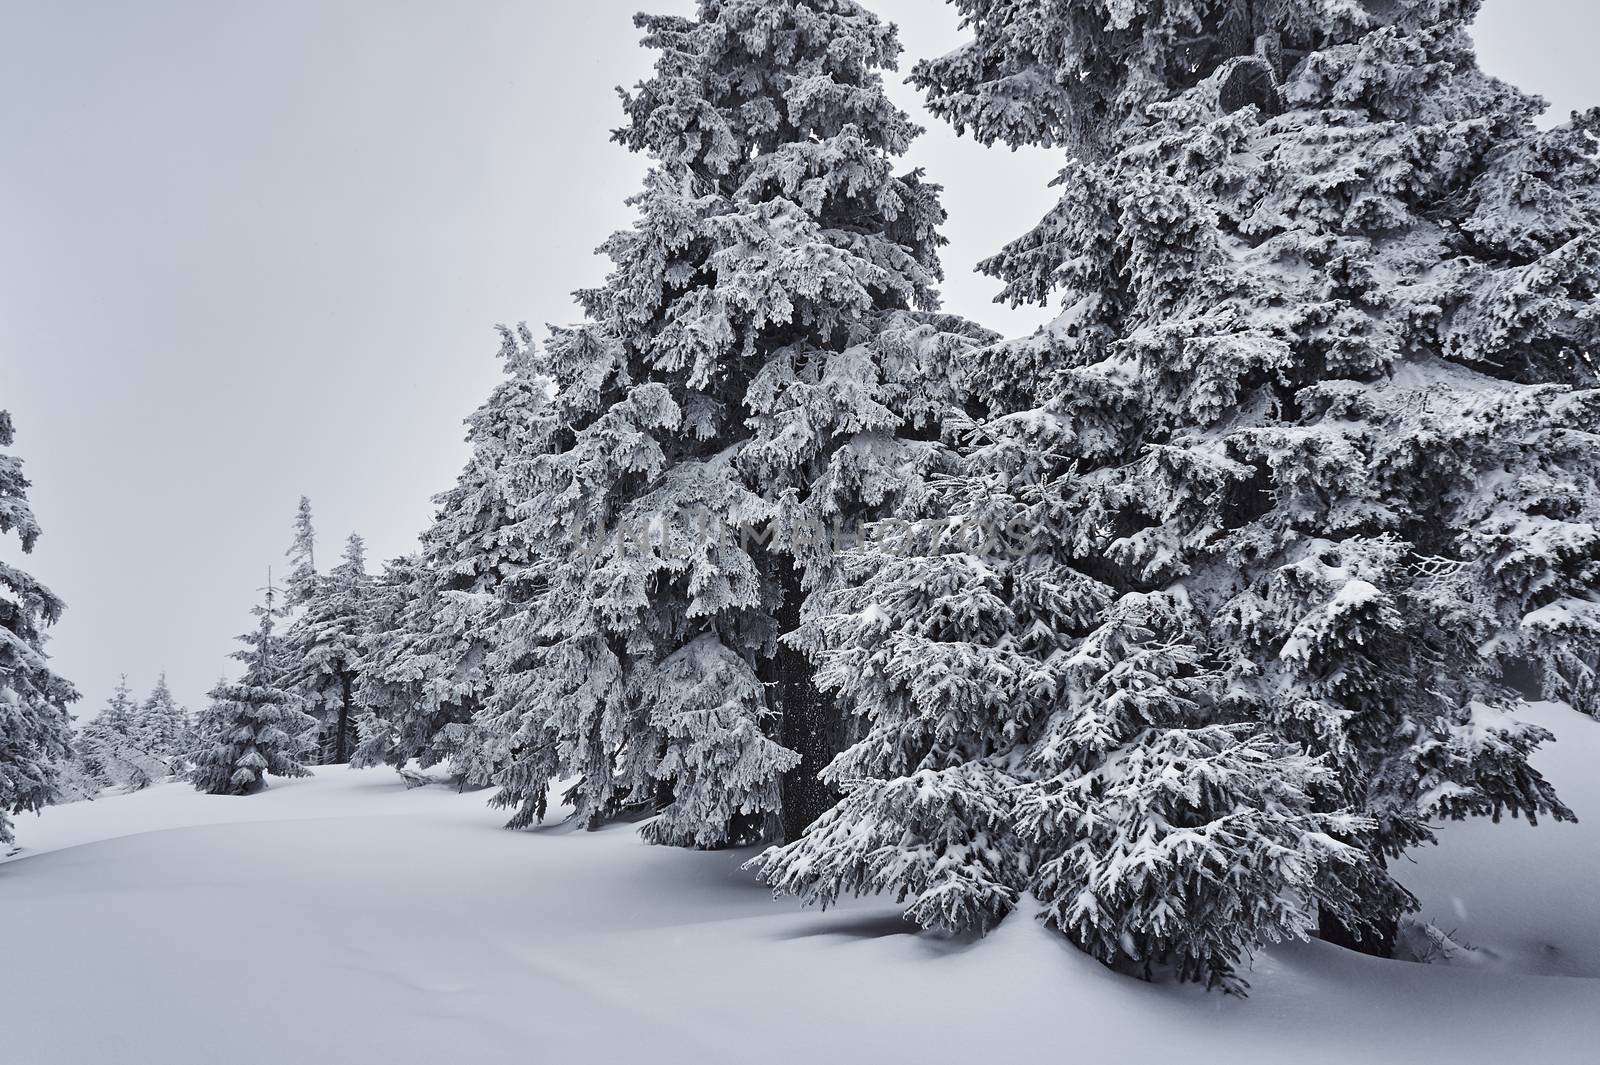 Snow-covered trees in the Jizera Mountains, Poland